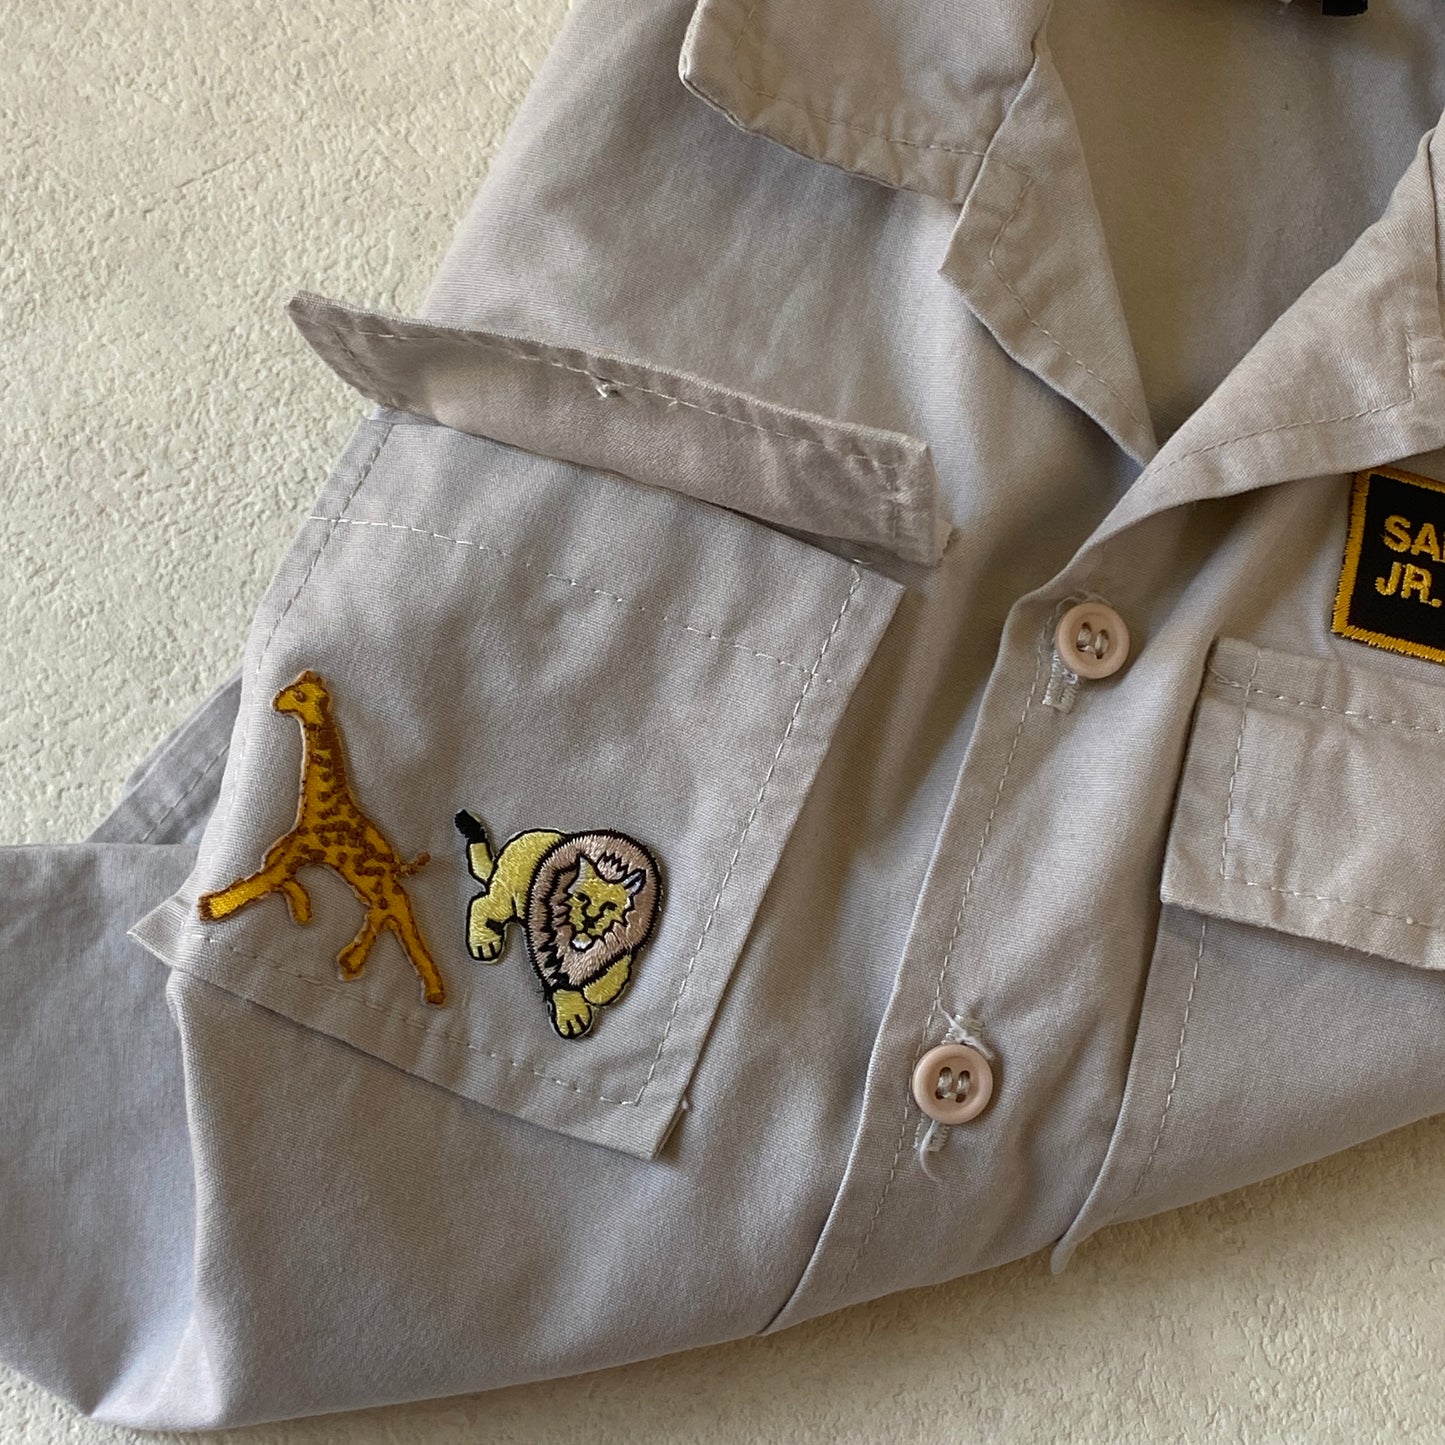 Safari Zookeeper Button-Down Shirt (2T)